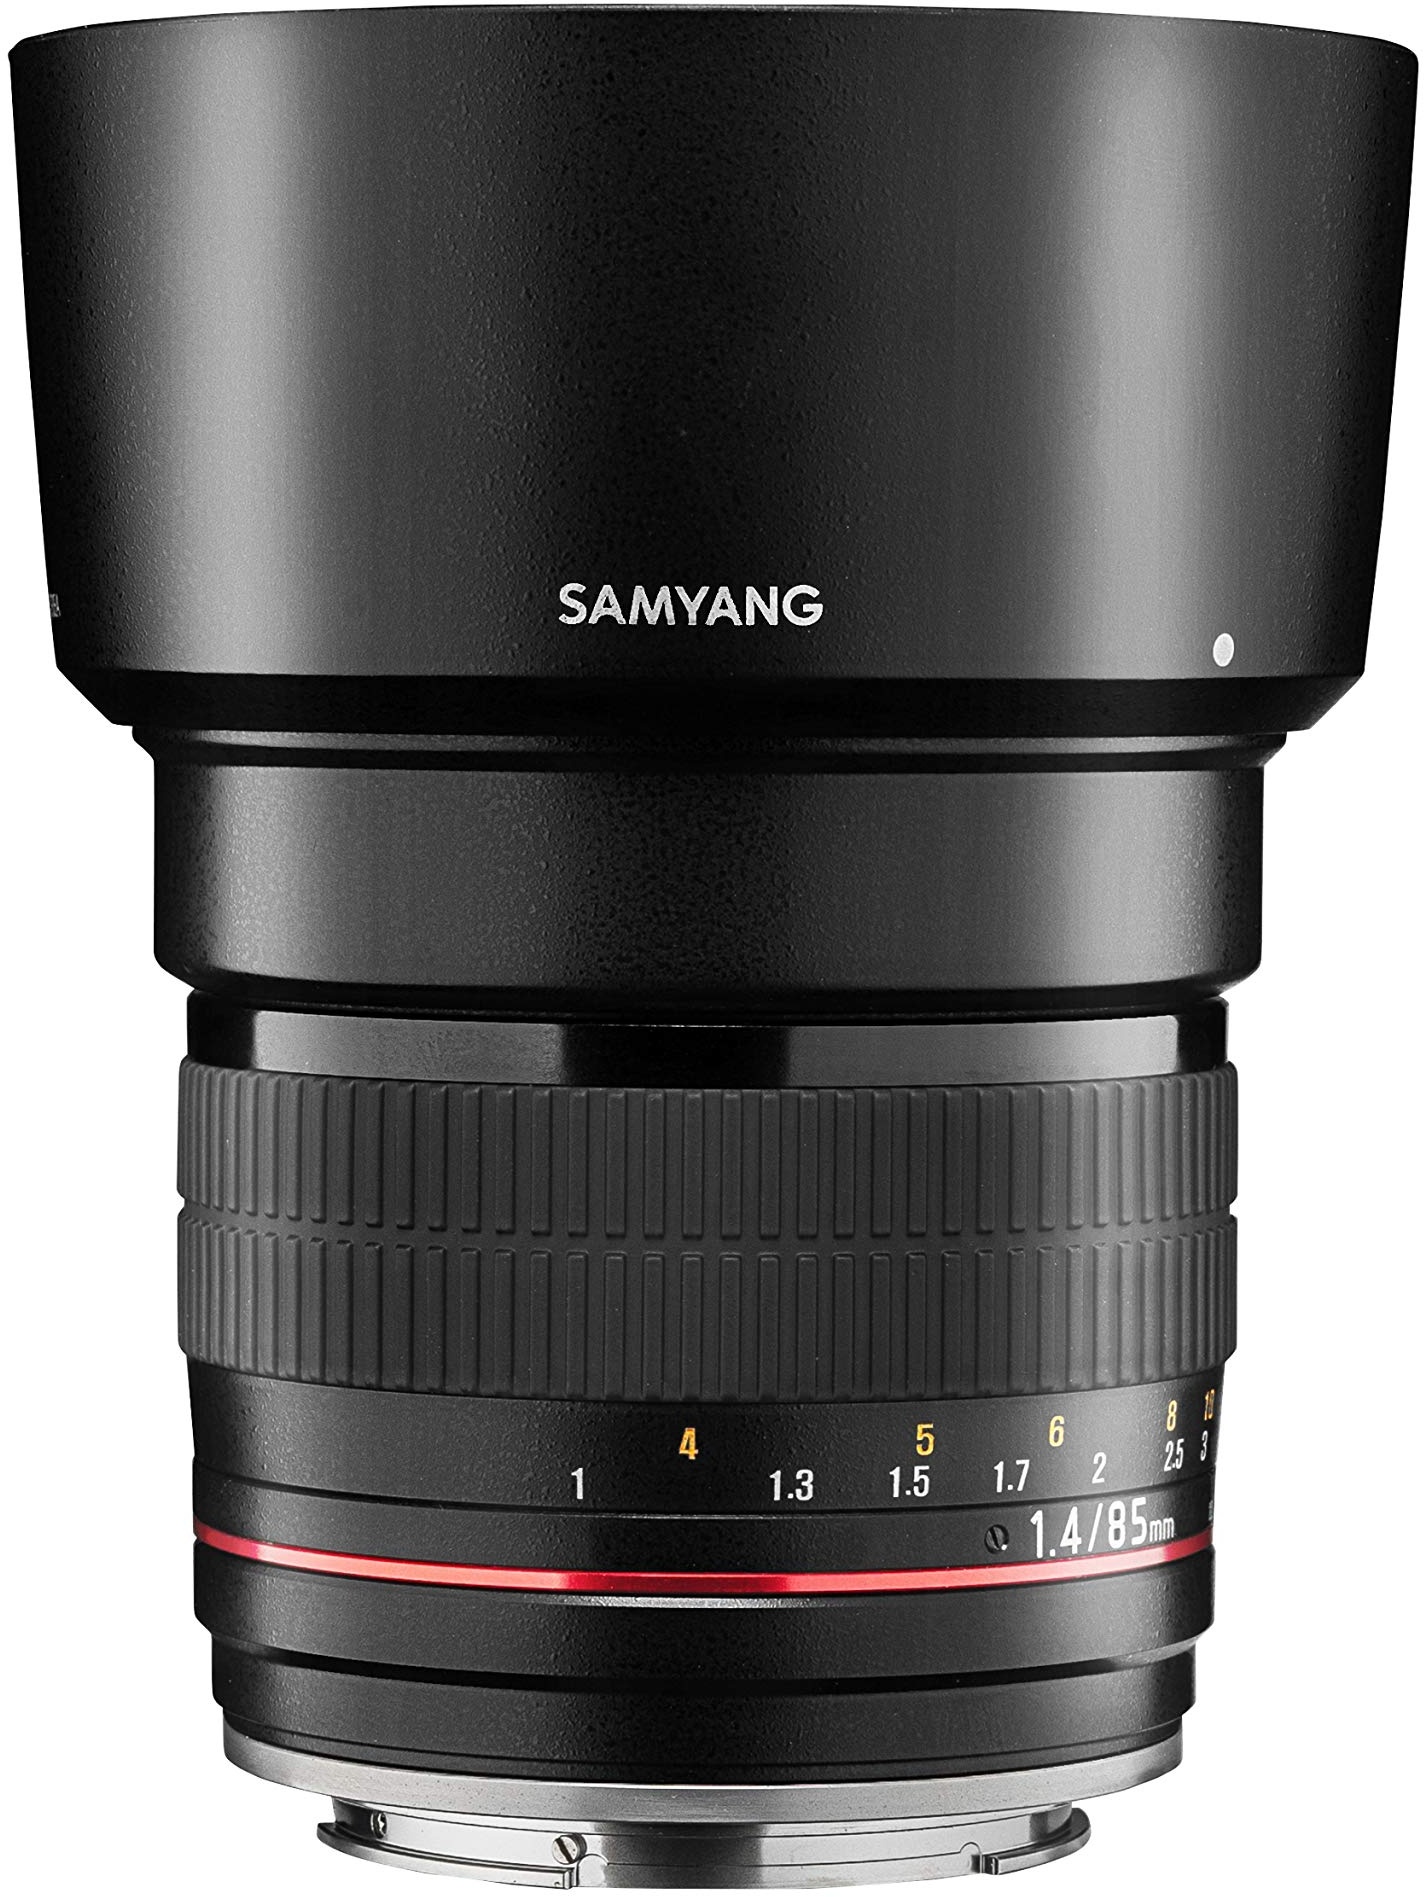 Samyang MF 85mm F1.4 AS IF UMC für Canon EF AE – Vollformat Portrait Objektiv für EF-Mount, geeignet für Canon EF AE, manueller Fokus, für Canon EOS-1D X Mark III, 6D Mark II, 5D Mark IV